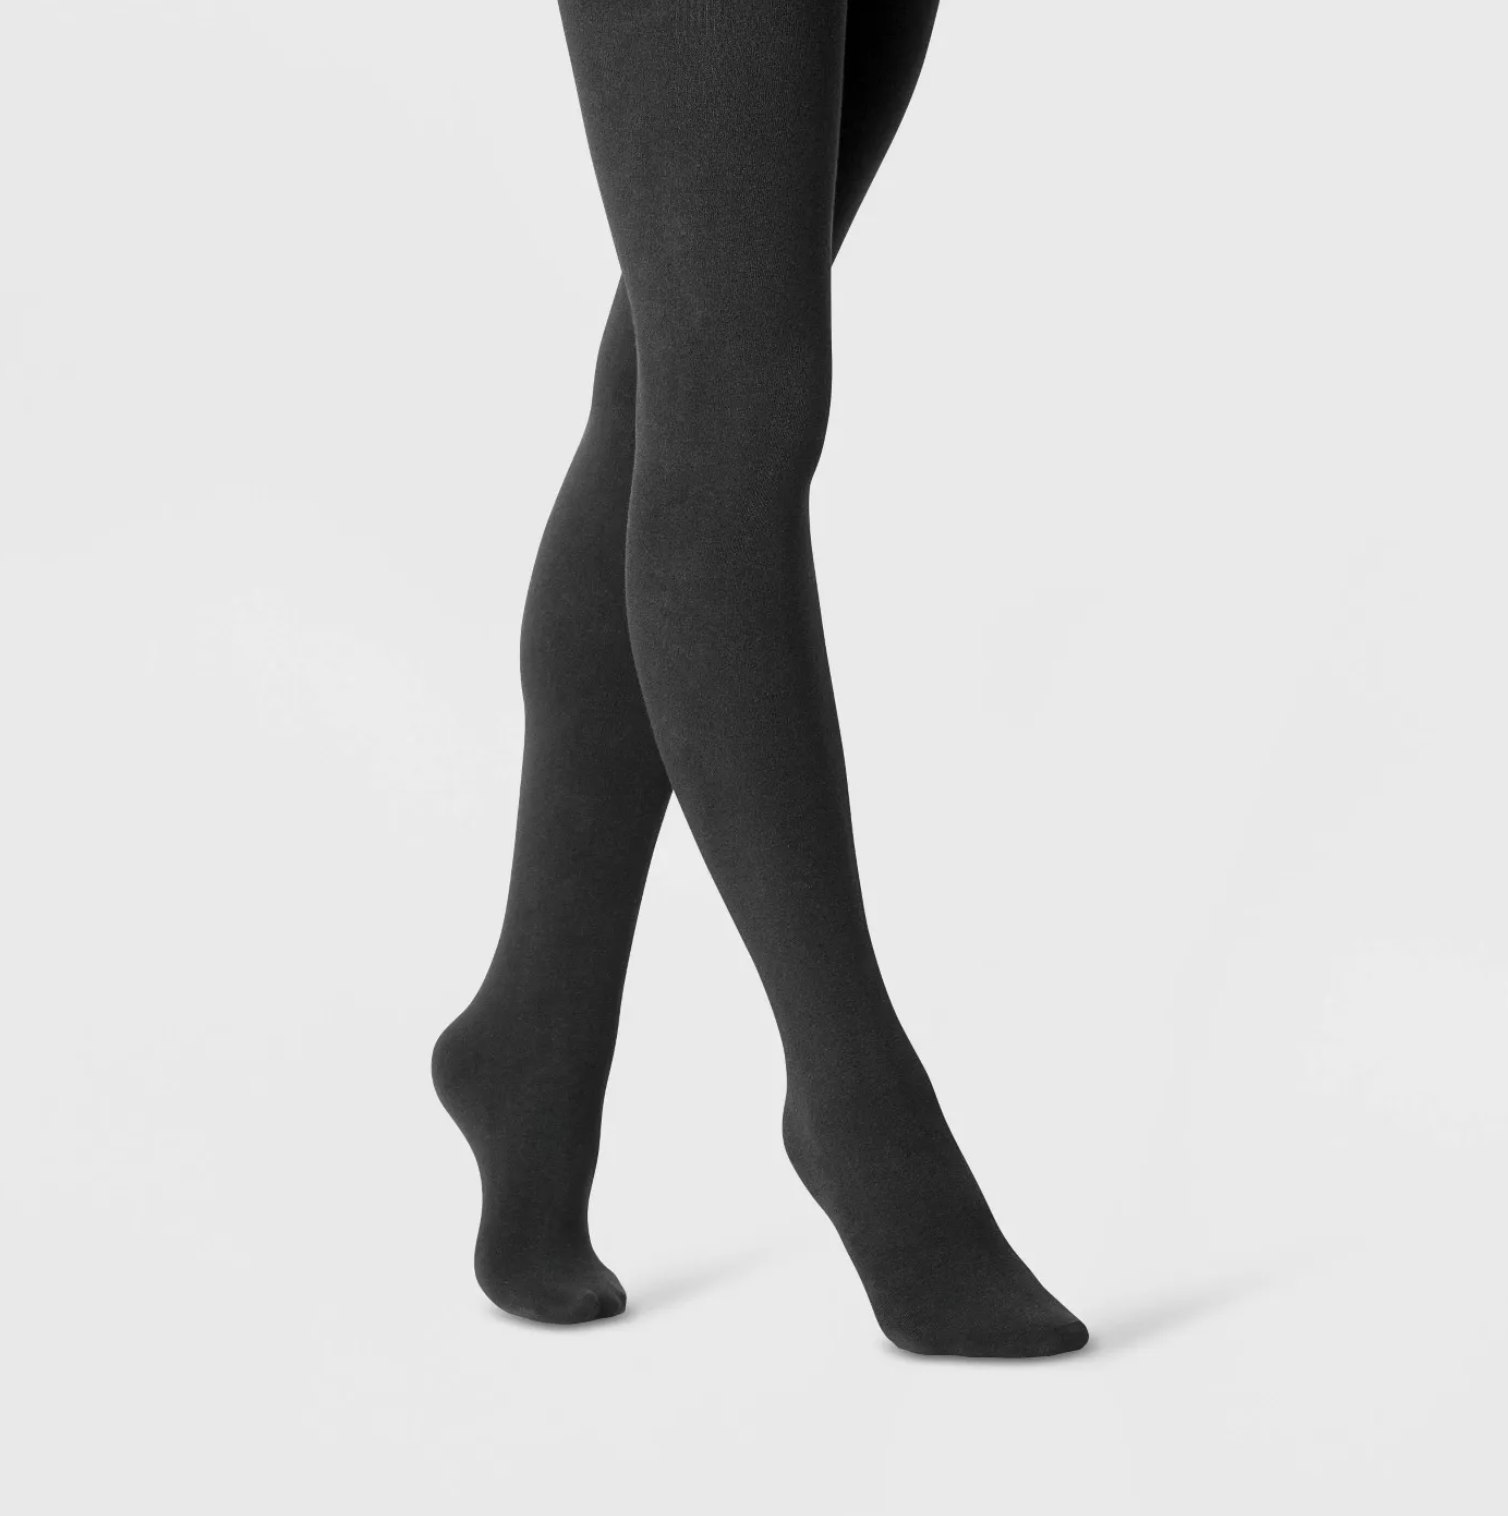 model wearing black tights